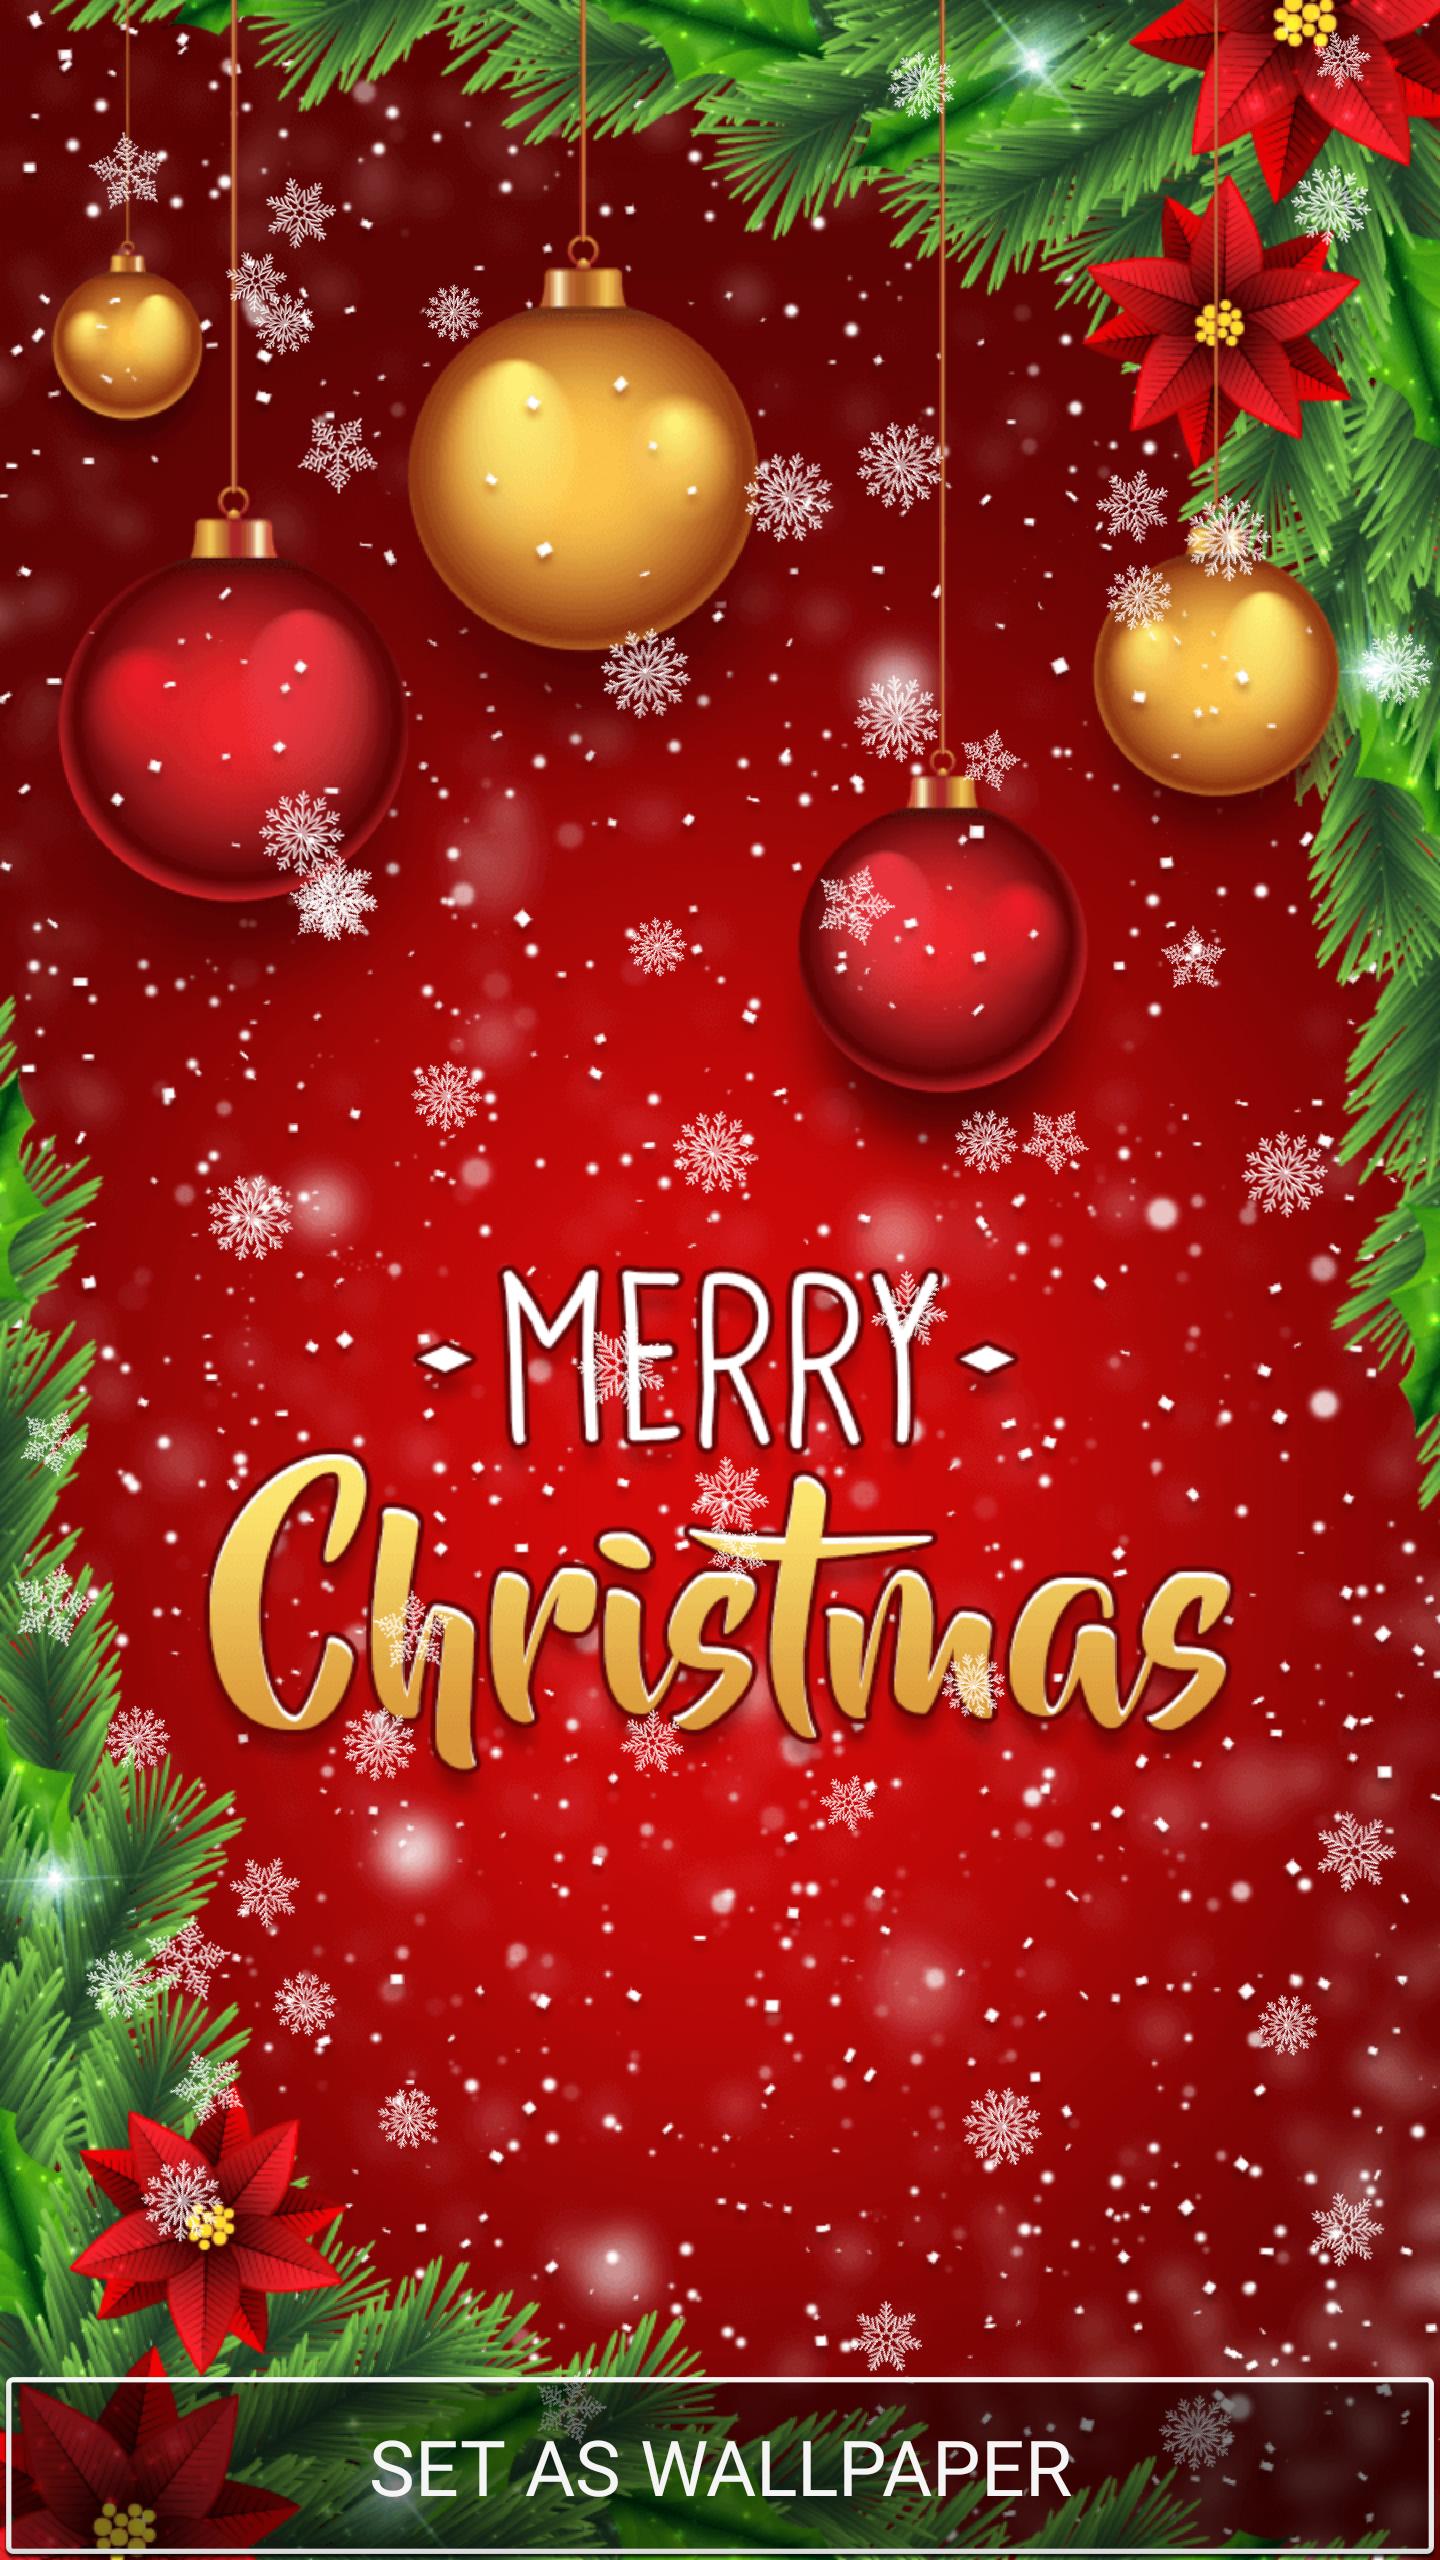 Immagini Natale Gratis.Sfondi Animati Natale Gratis For Android Apk Download